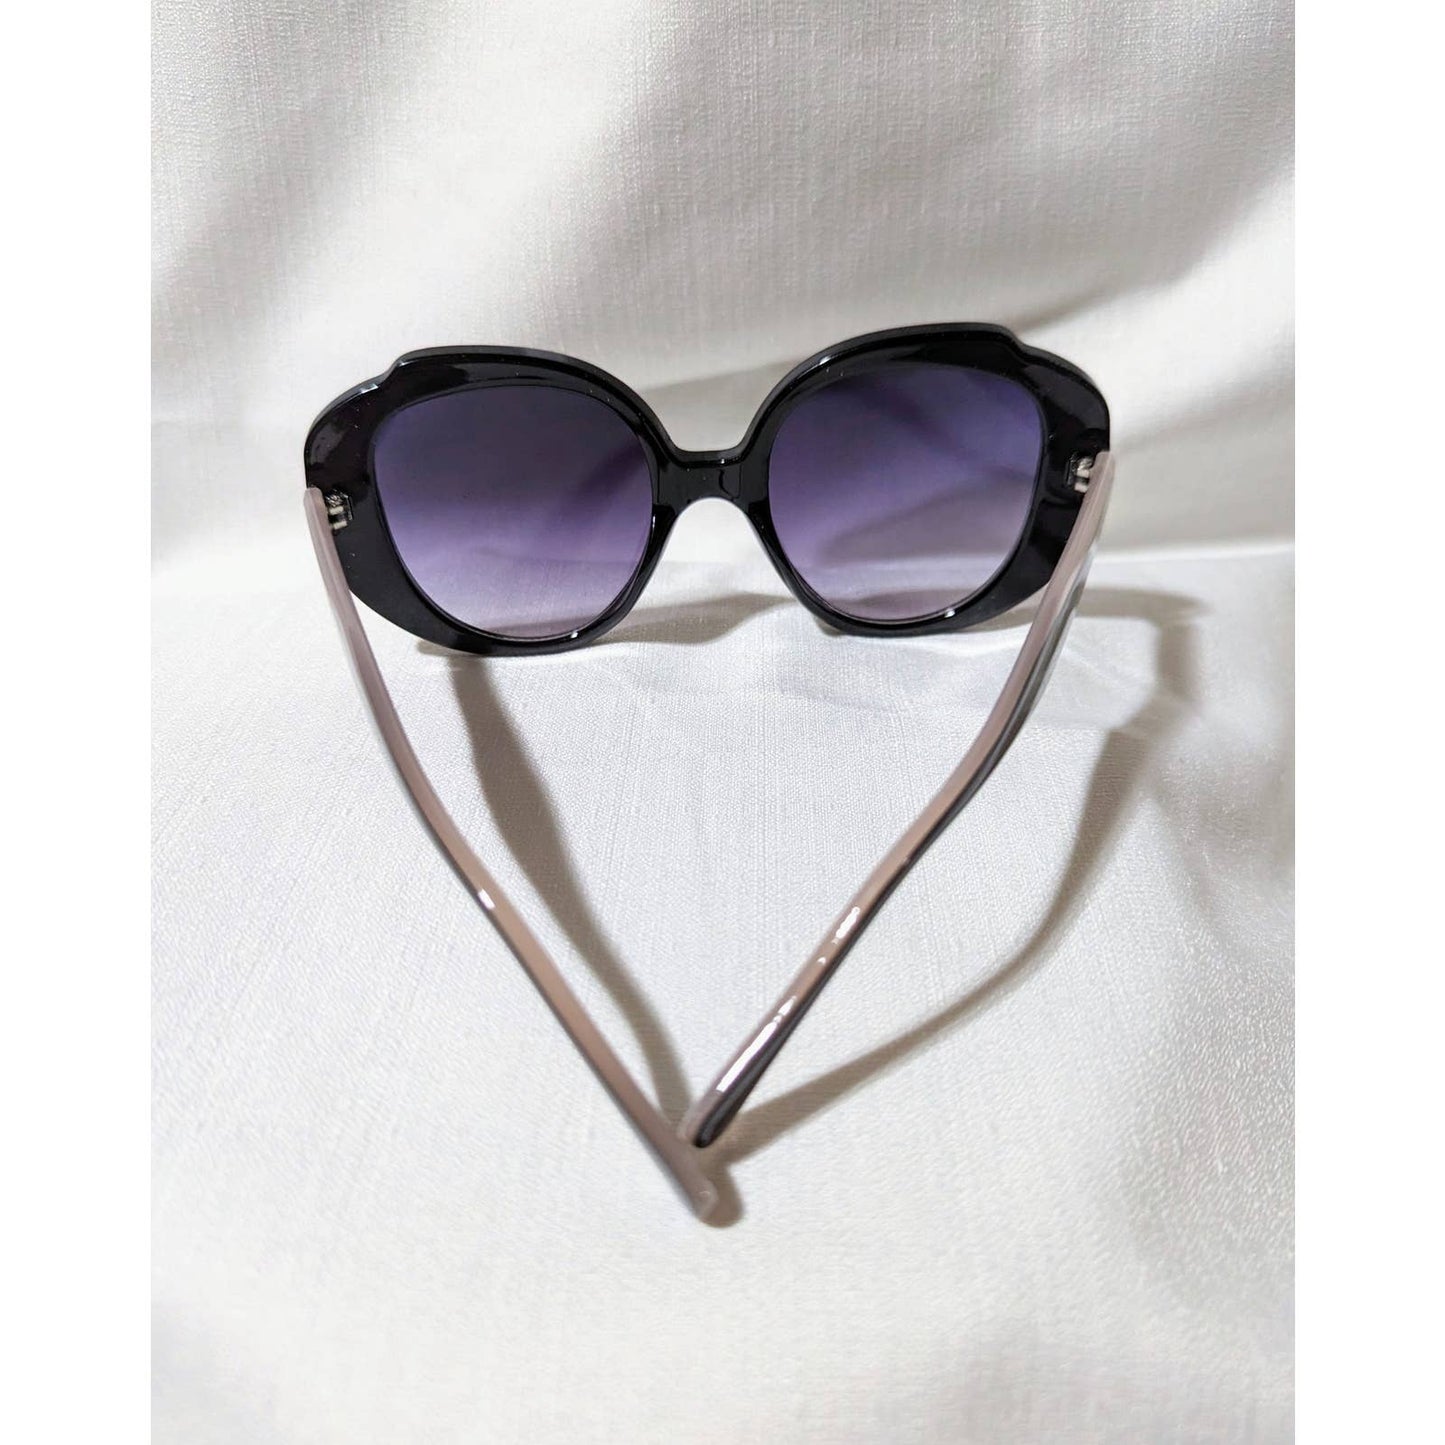 Mimi Black Oversized Butterfly Retro Style Sunglasses Stripes